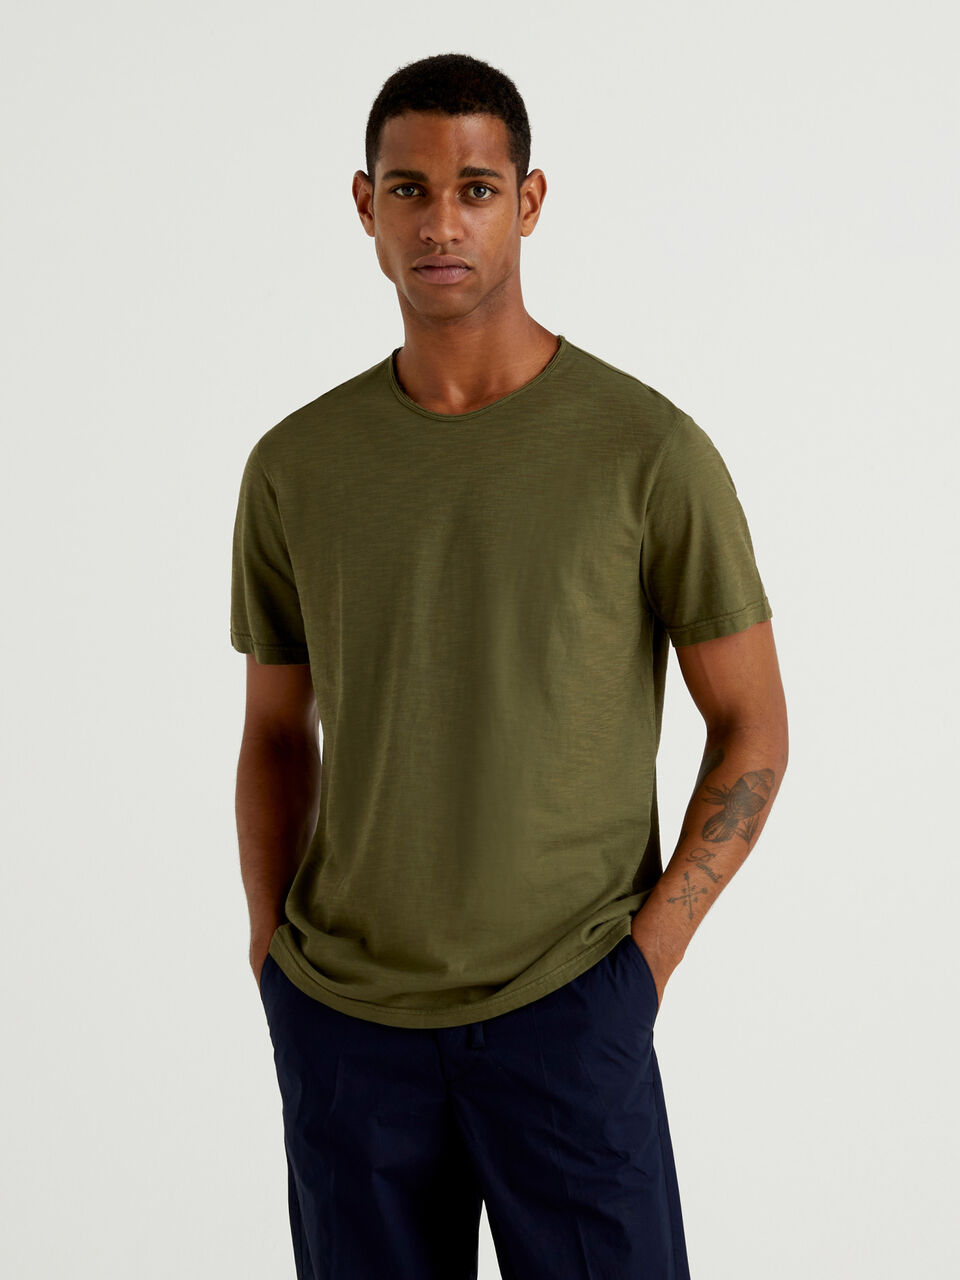 Camiseta con frase verde militar hombre te vi white optician